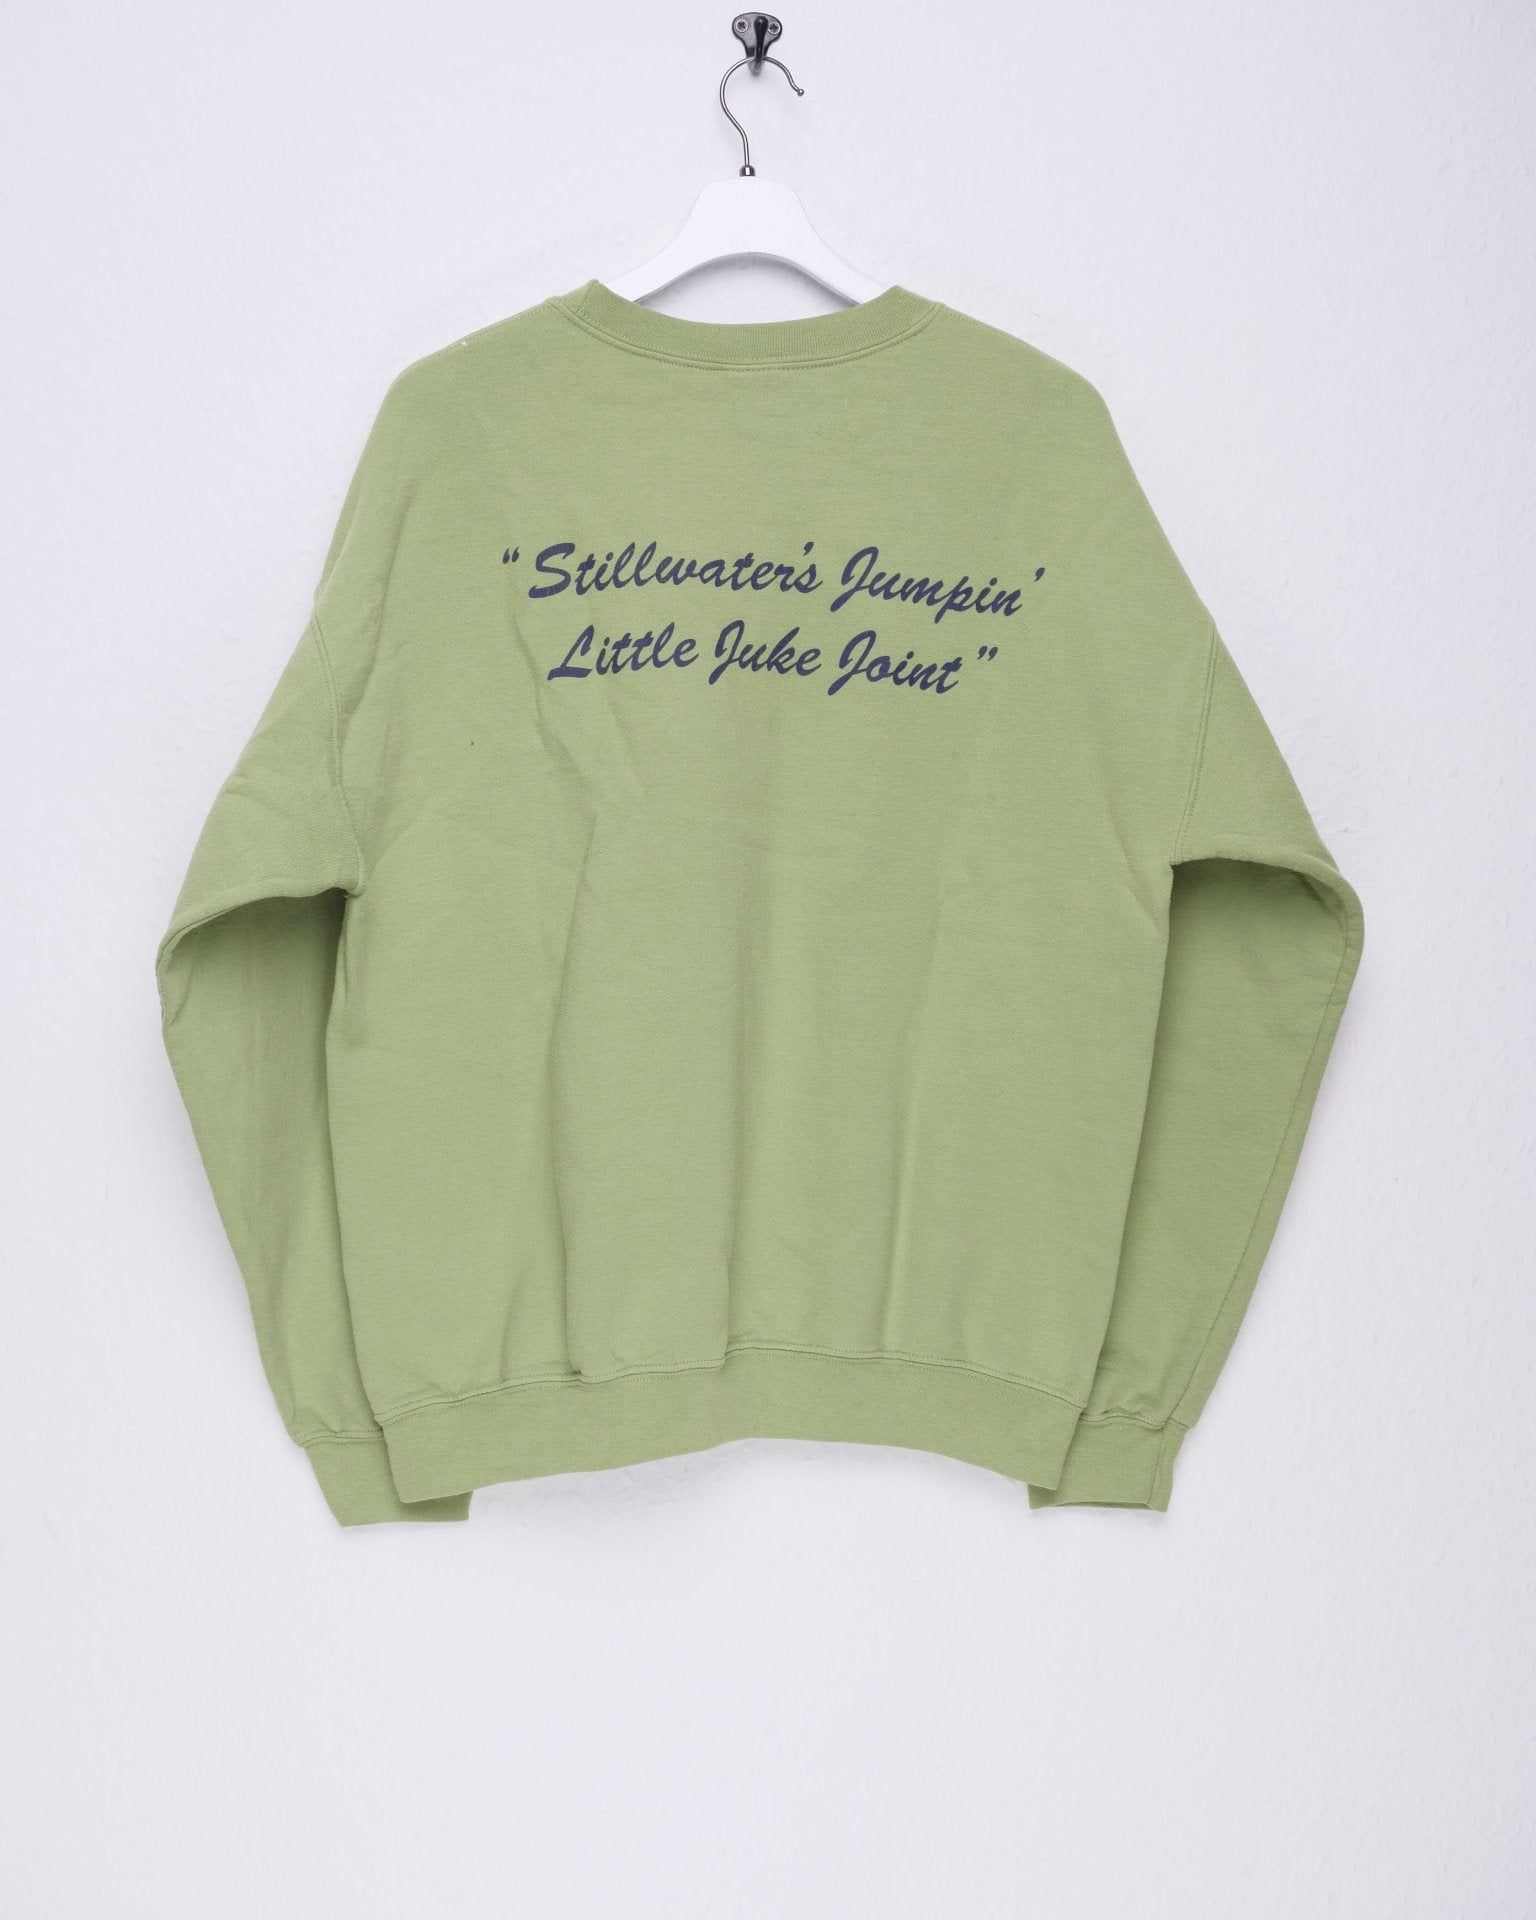 Eskimo Joe's printed green Sweater - Peeces